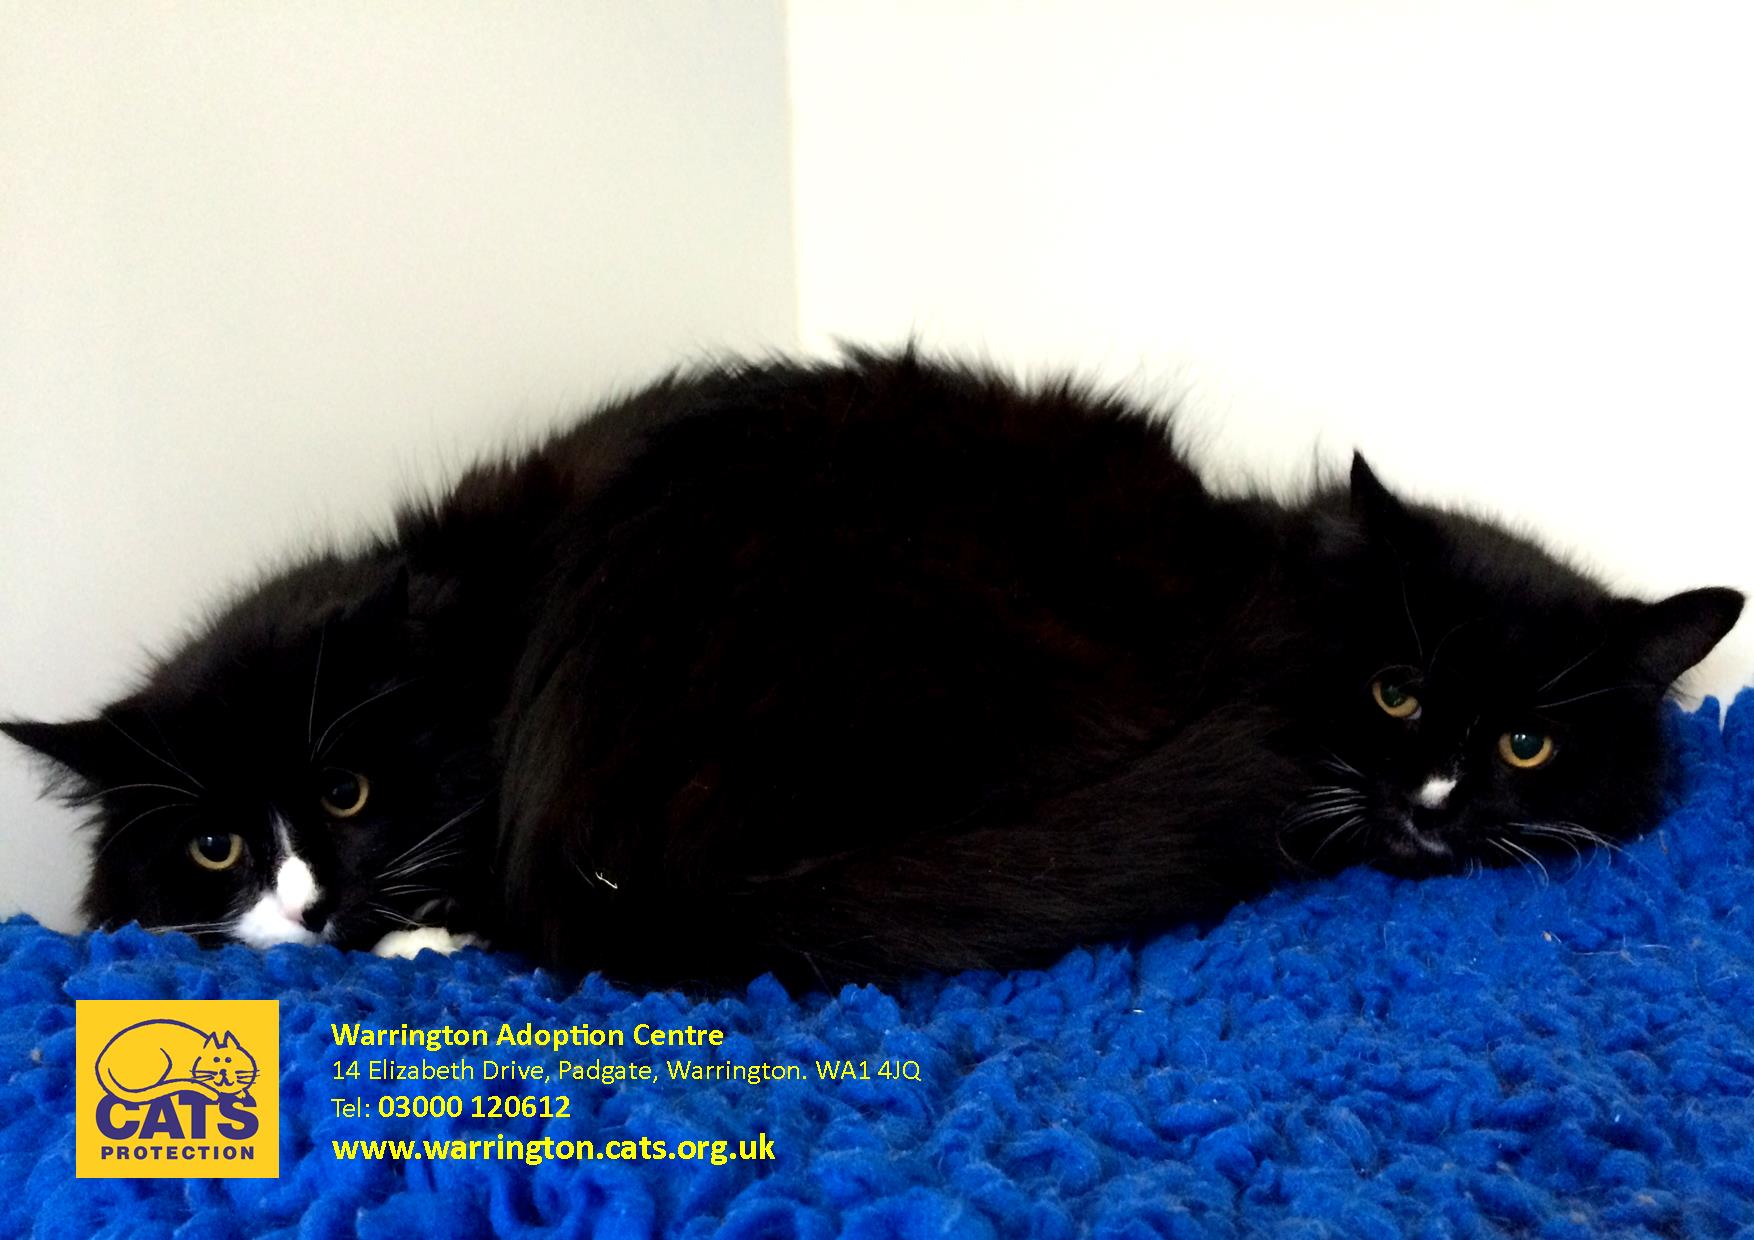 Can You Help Adoption Centre Seeks Home For Rare Fairytale Cat Warrington Guardian